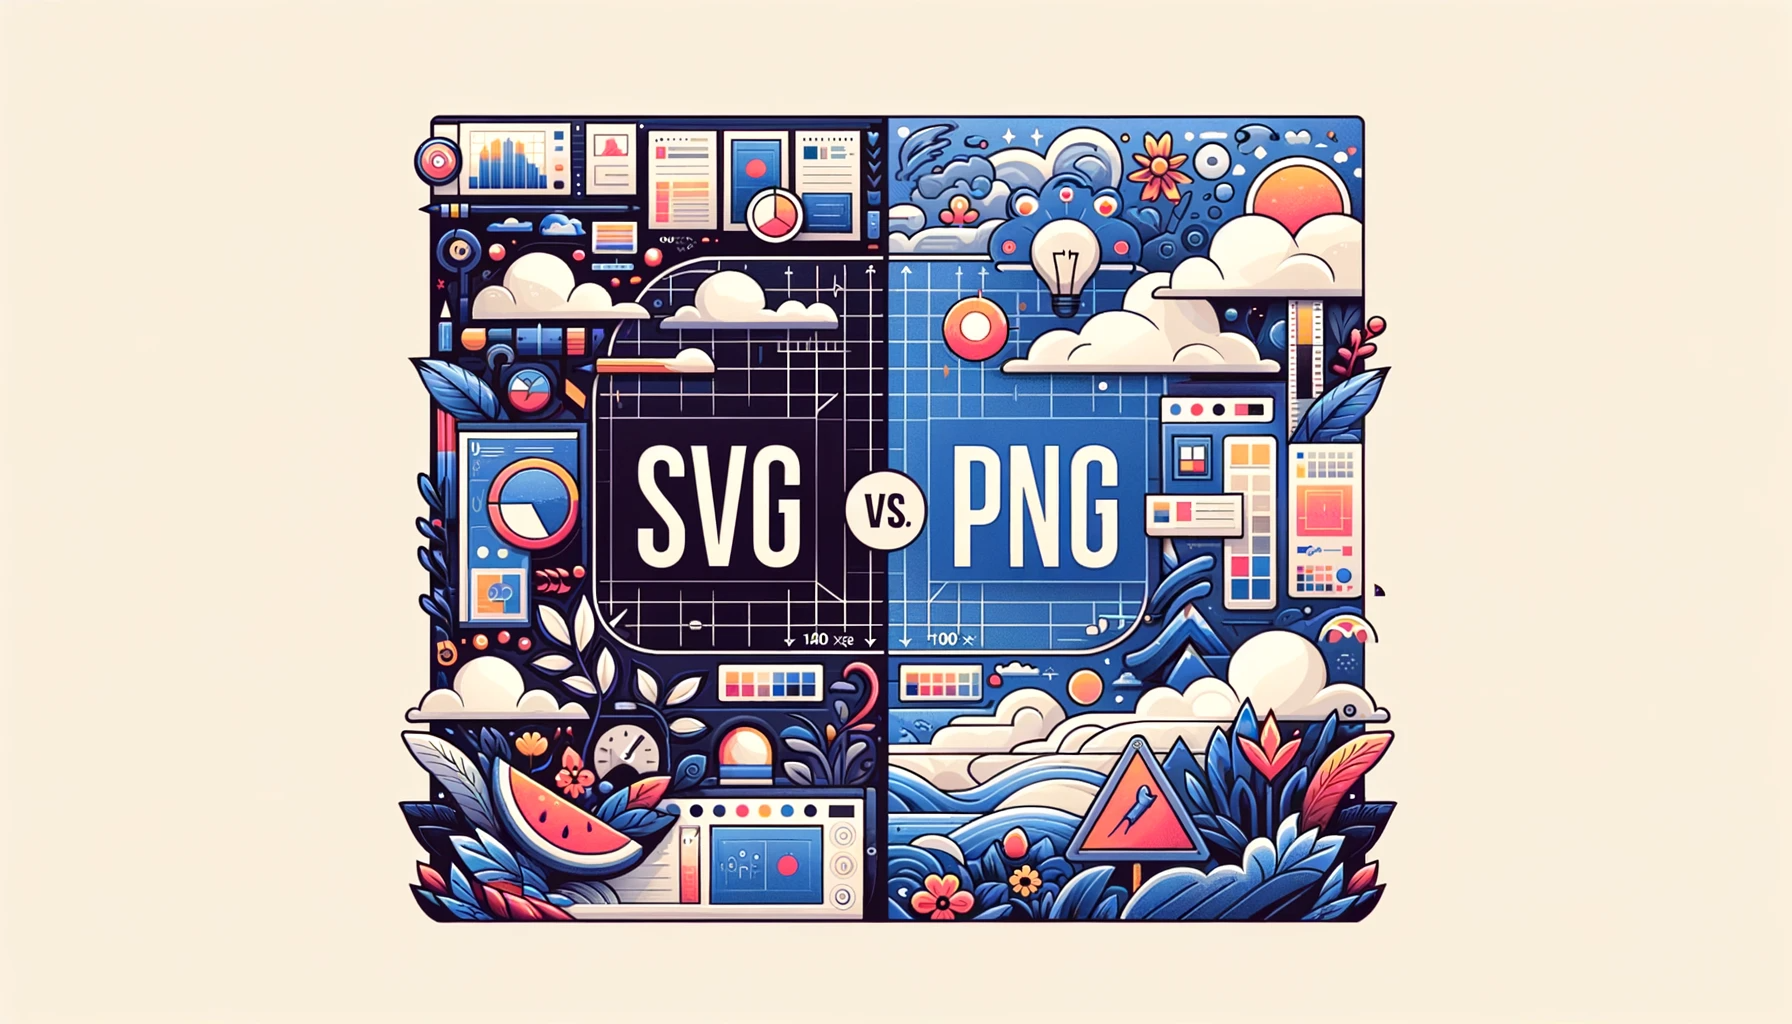 svg vs png files